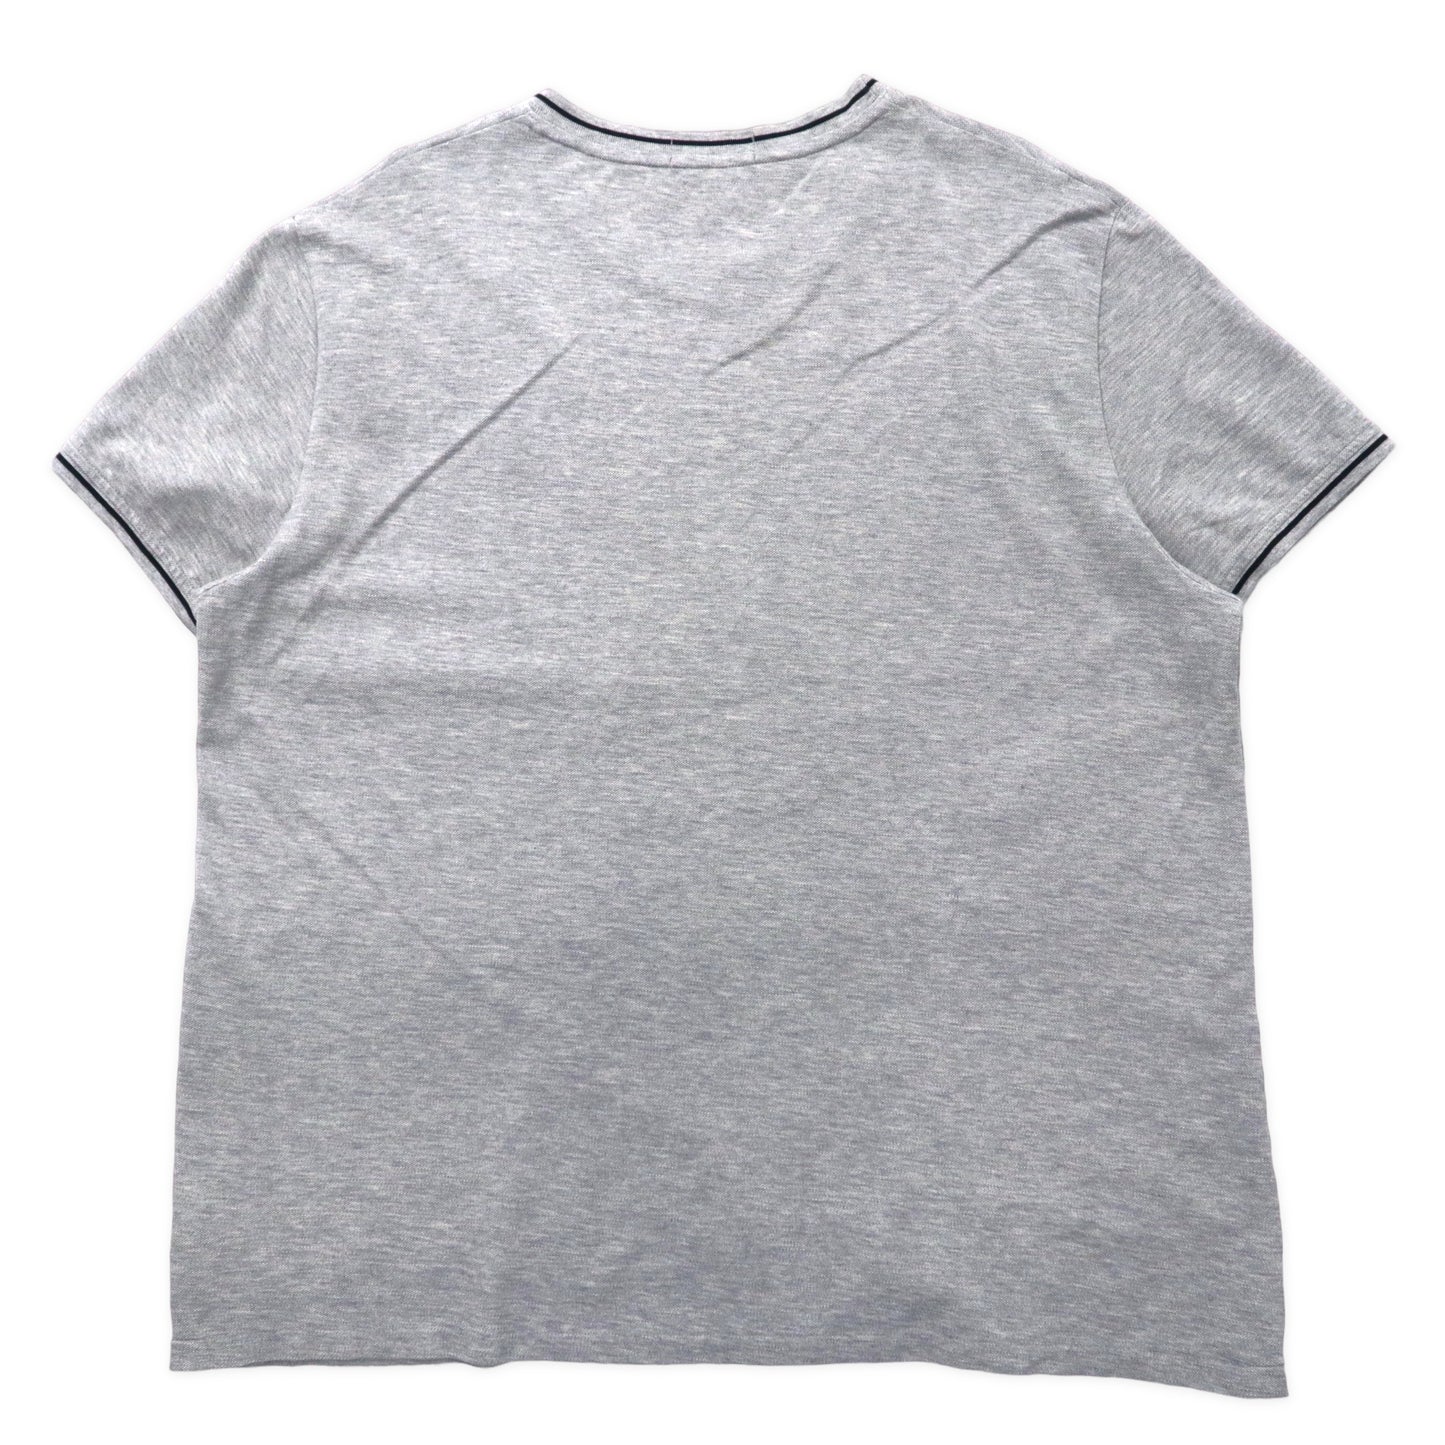 POLO RALPH LAUREN リブラインTシャツ XL グレー コットン CUSTOM SLIM FIT スモールポニー刺繍